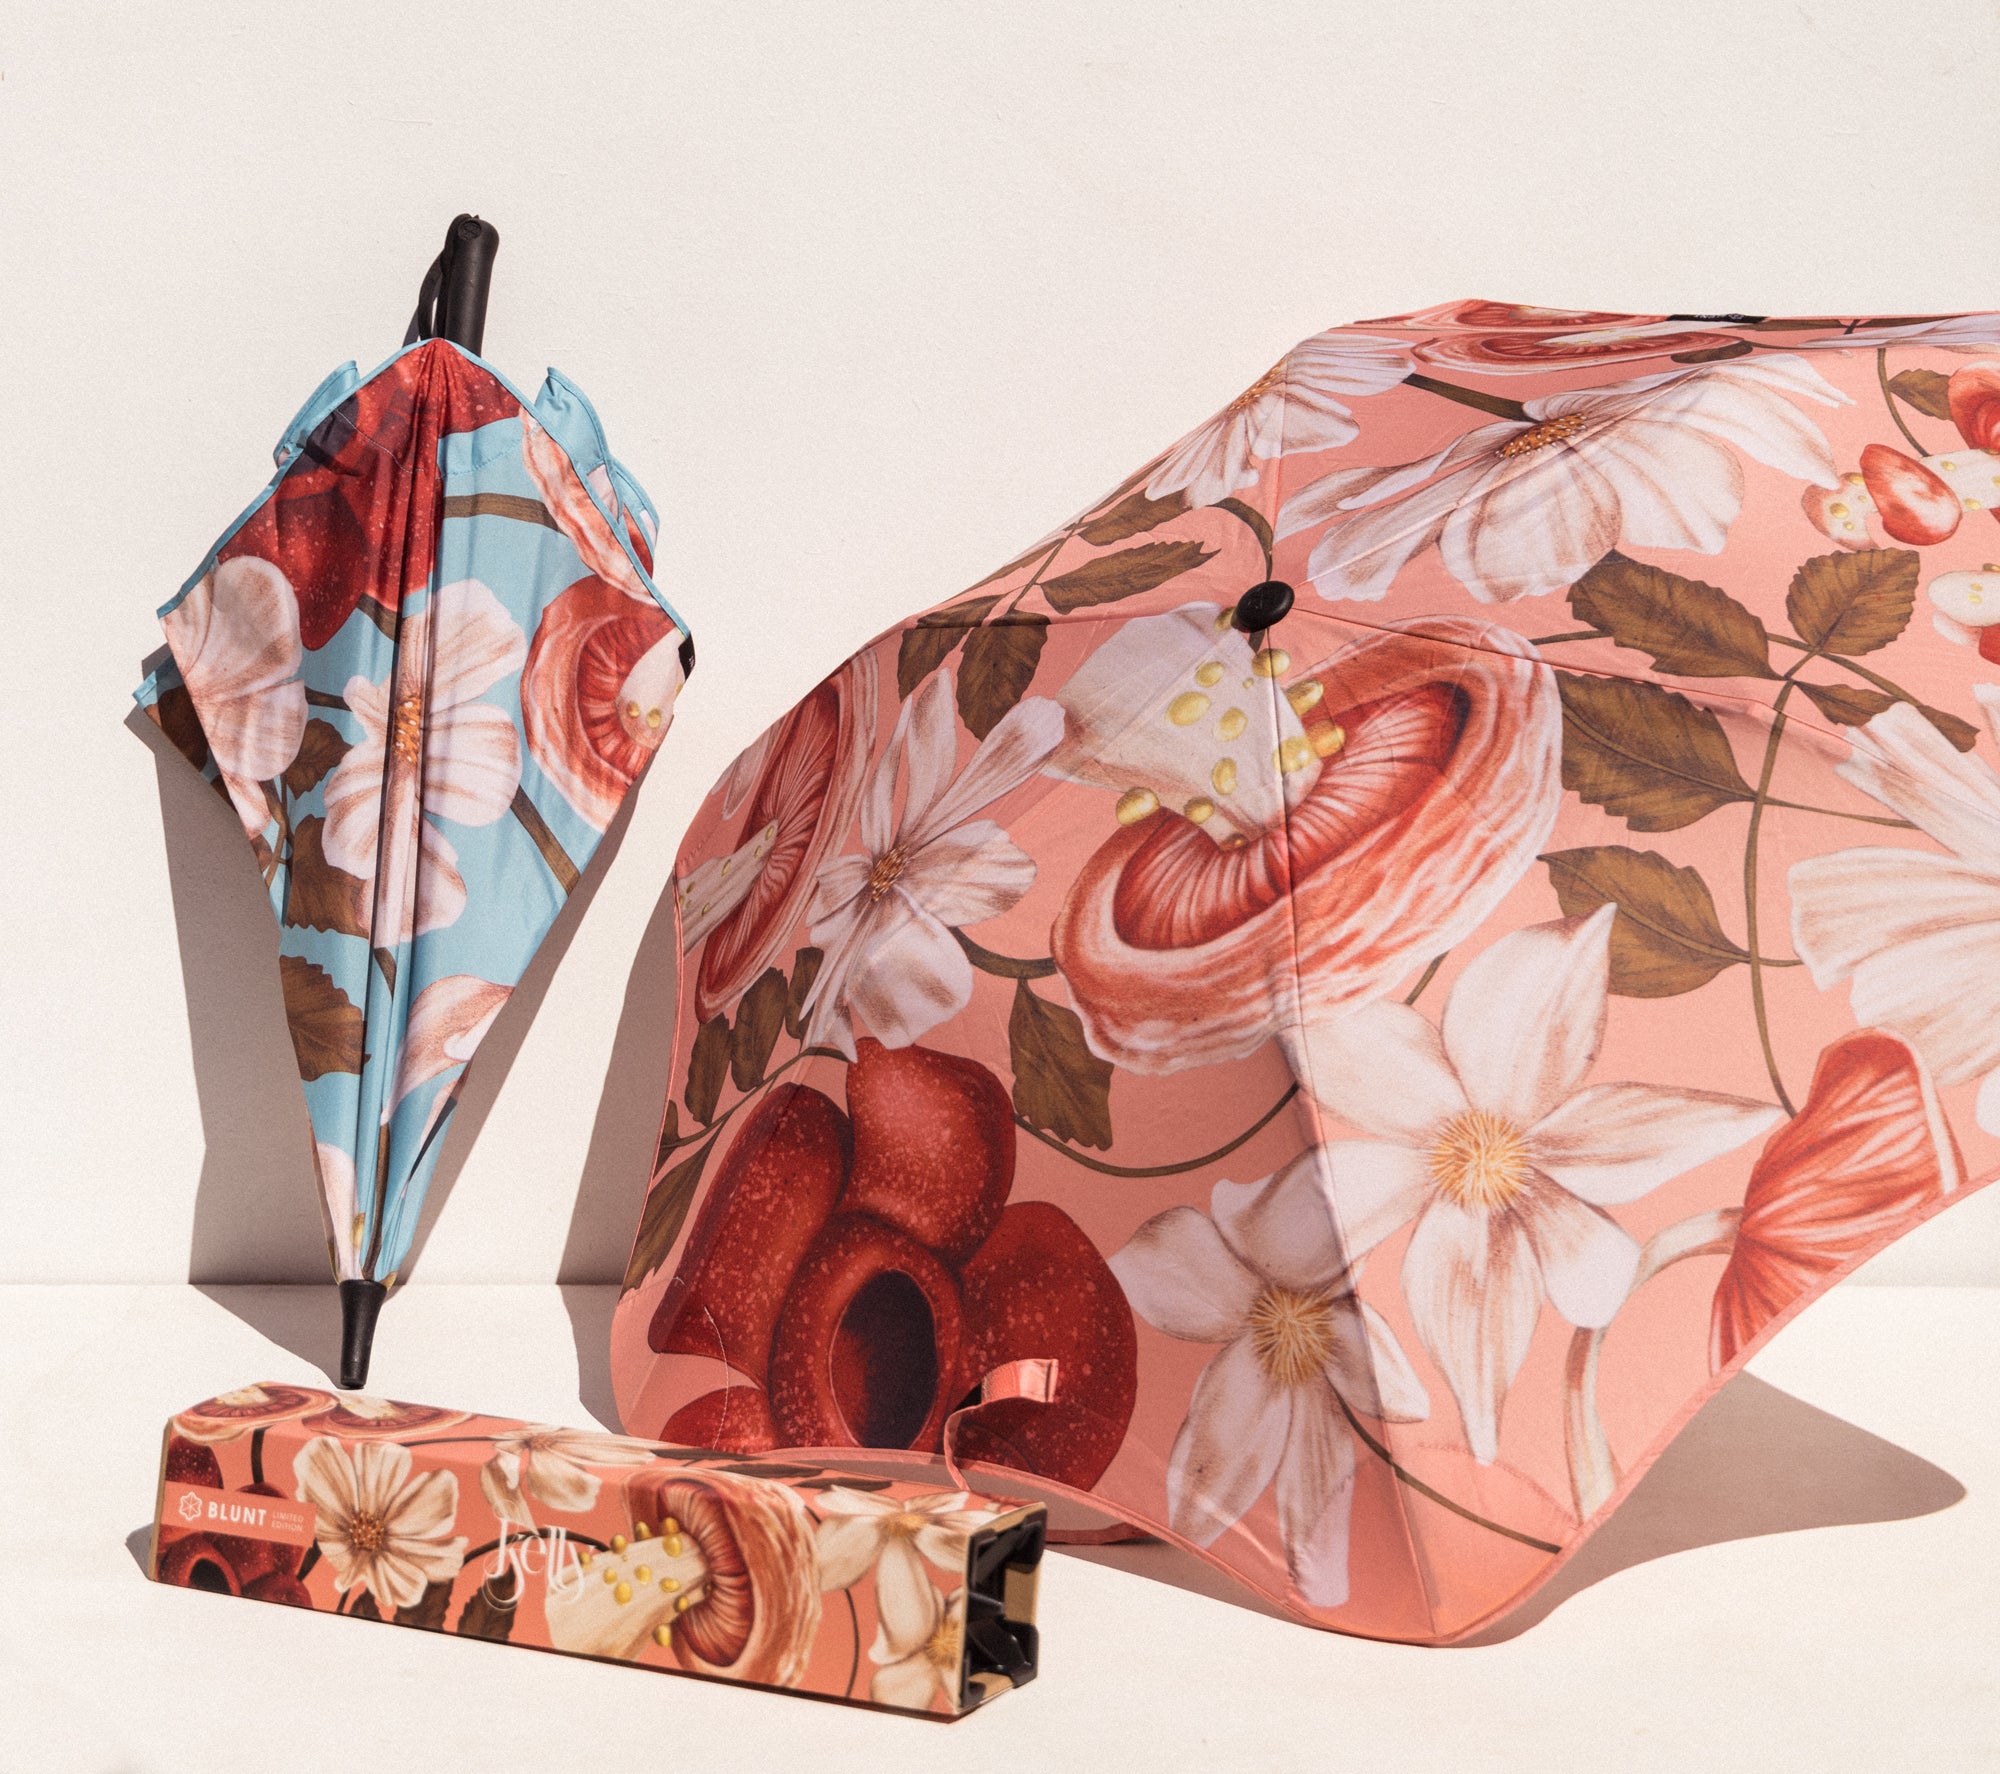 Kelly Thompson Blunt Umbrellas Blooms and Shrooms umbrella design collaboration illustration